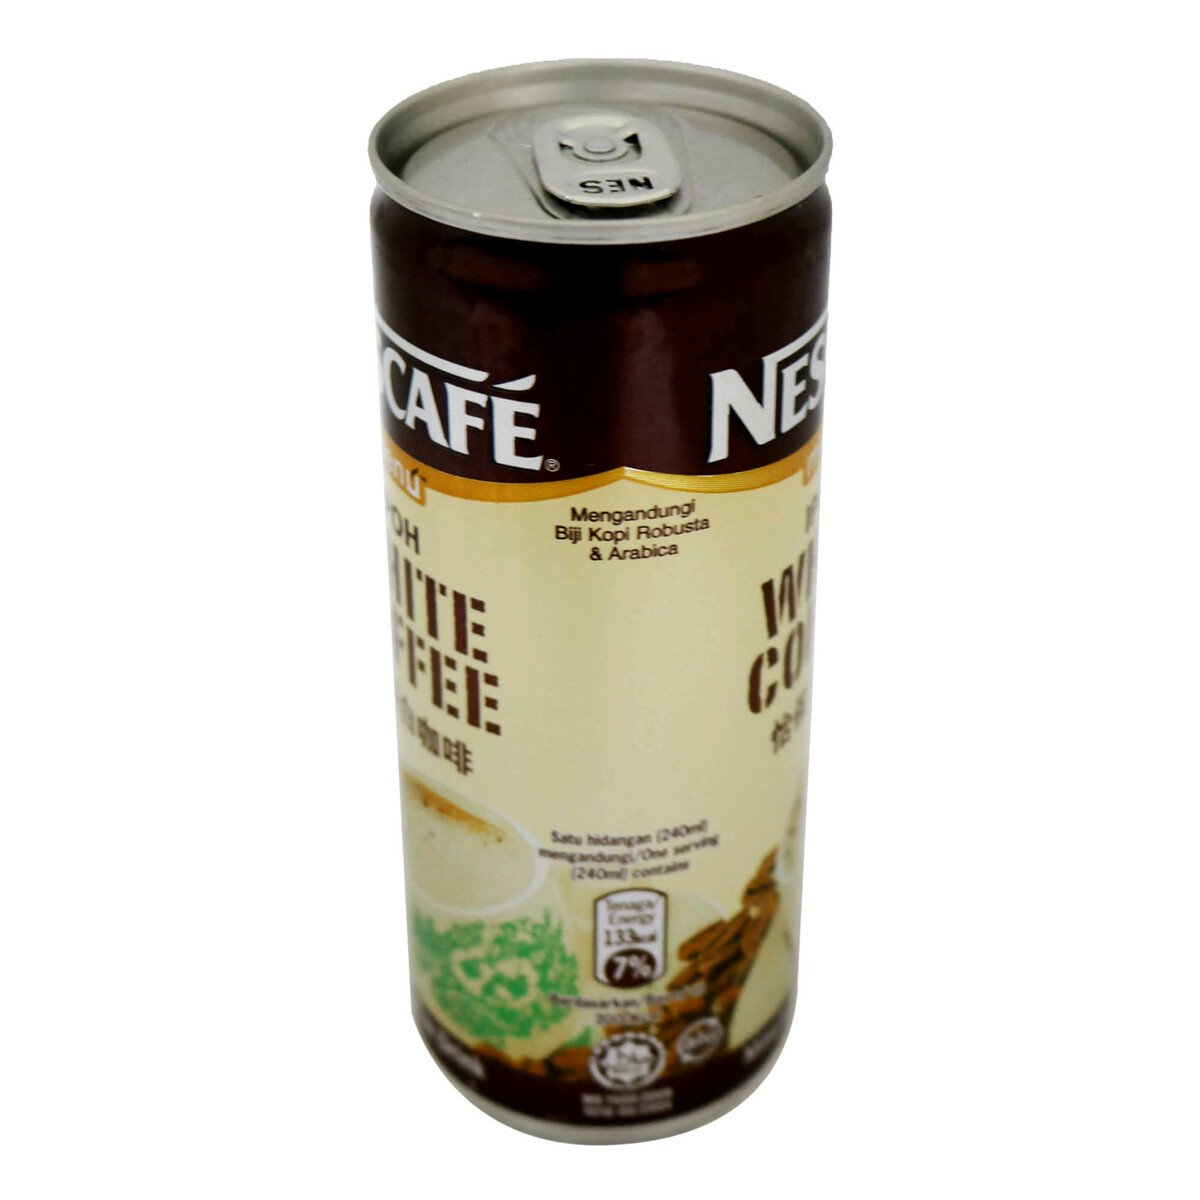 Nescafe White Coffee Can 240ml